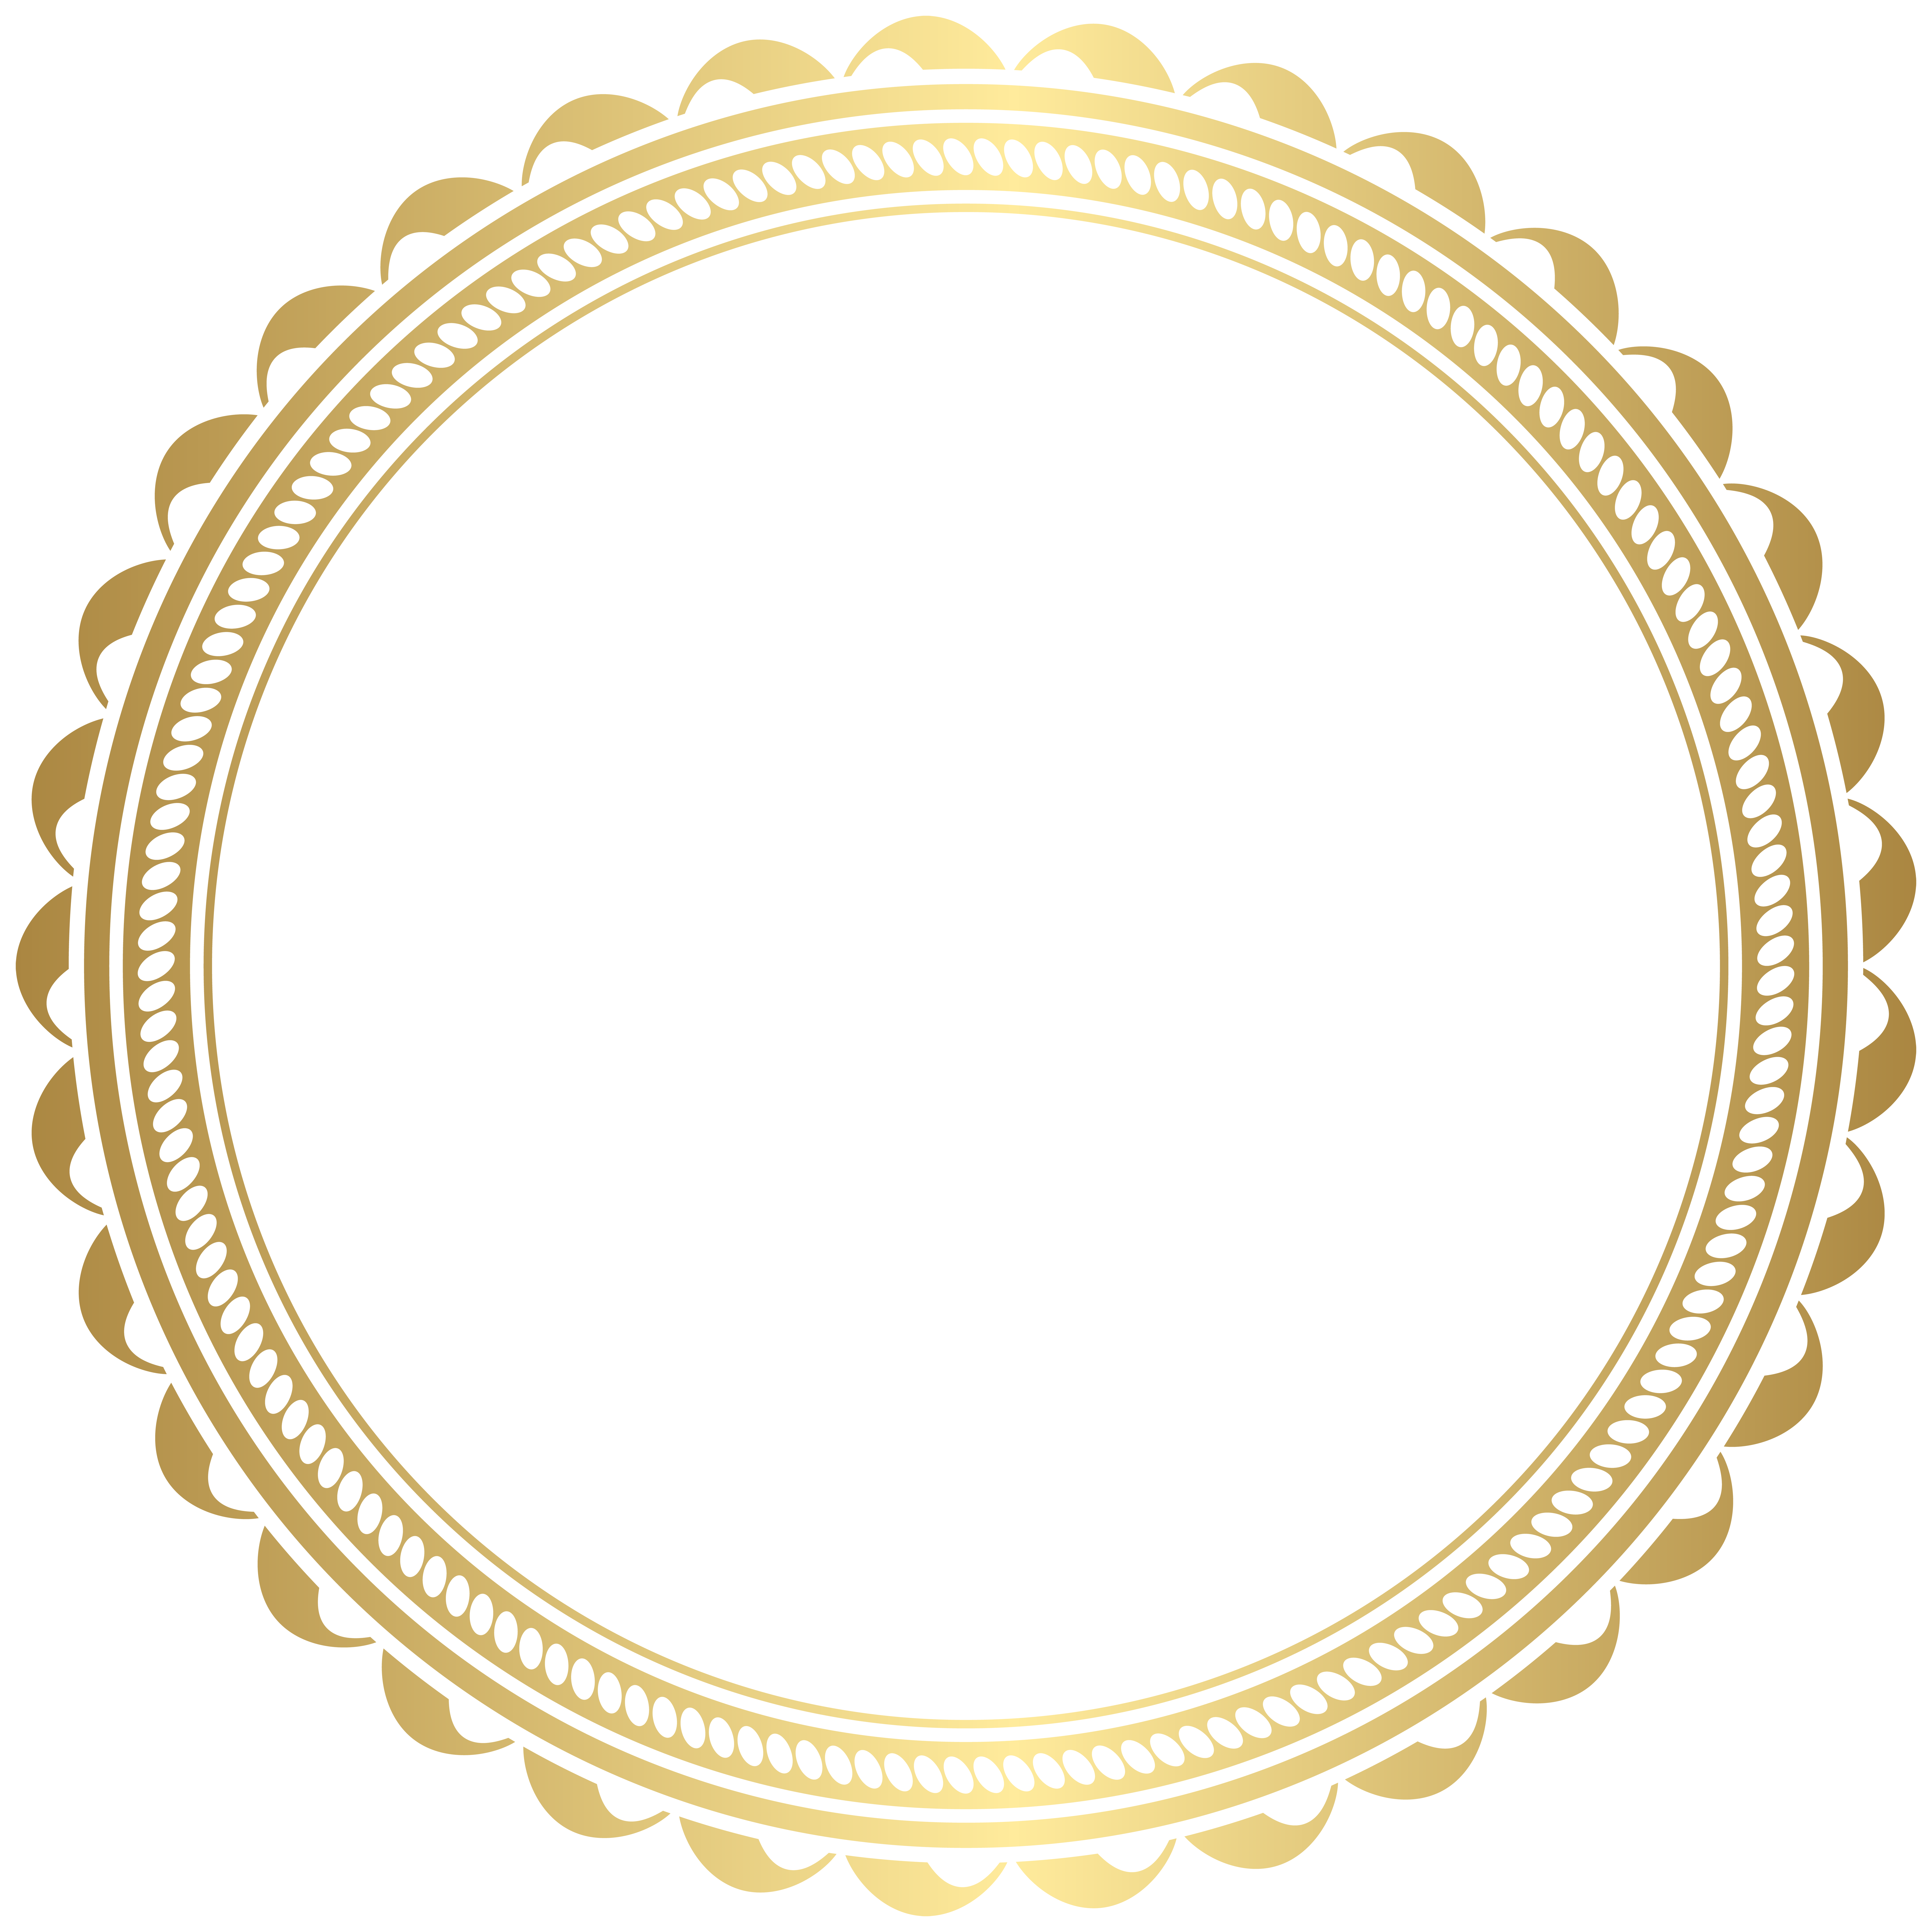 Golden Round Frame Transparent